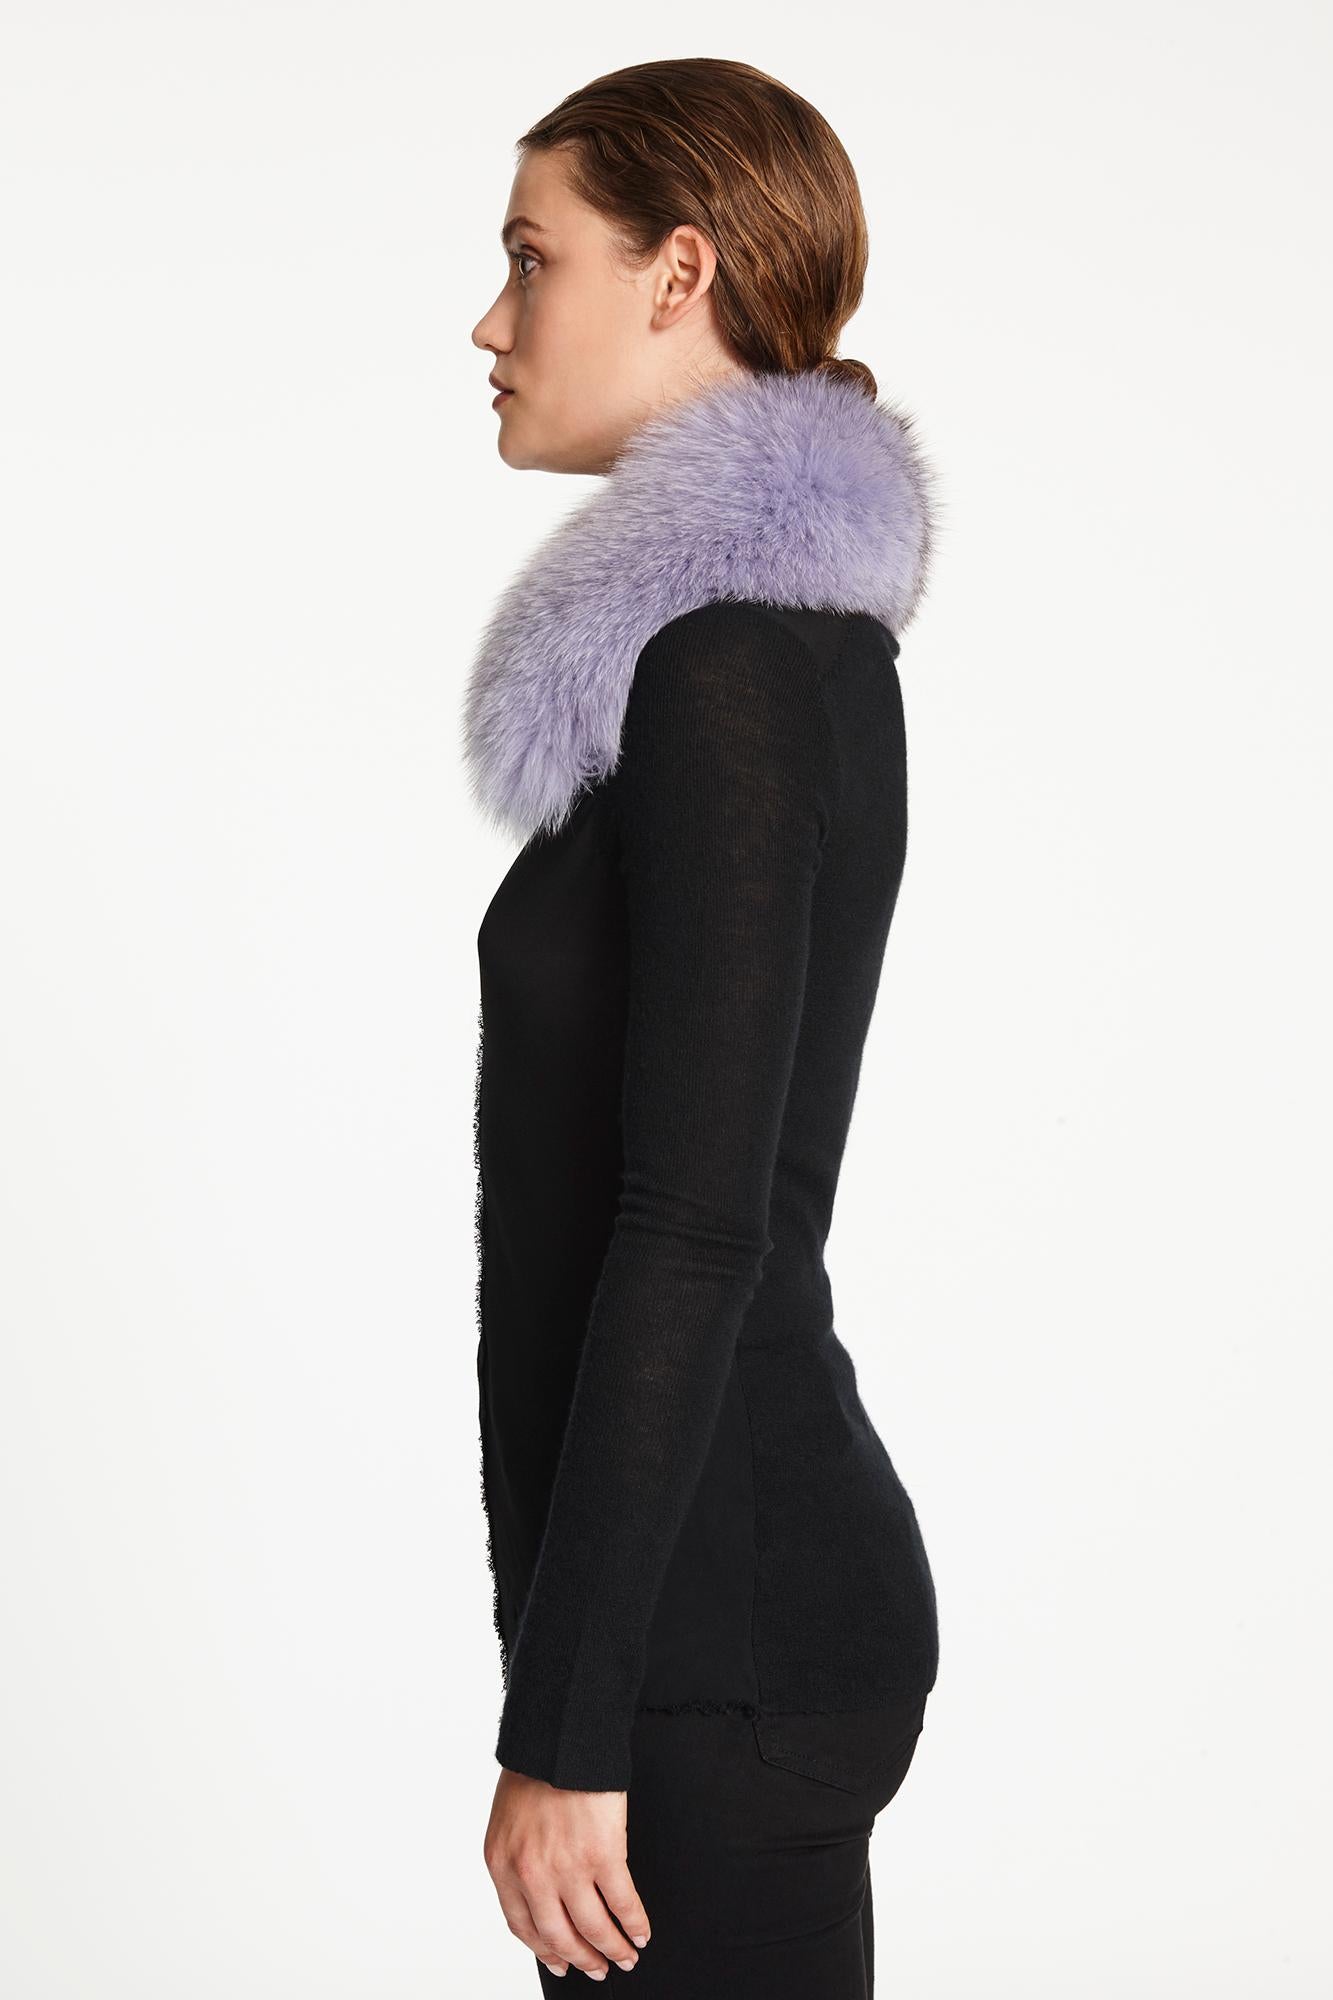 Verheyen London Peter Pan Collar in Lilac Fox Fur - Brand New  2